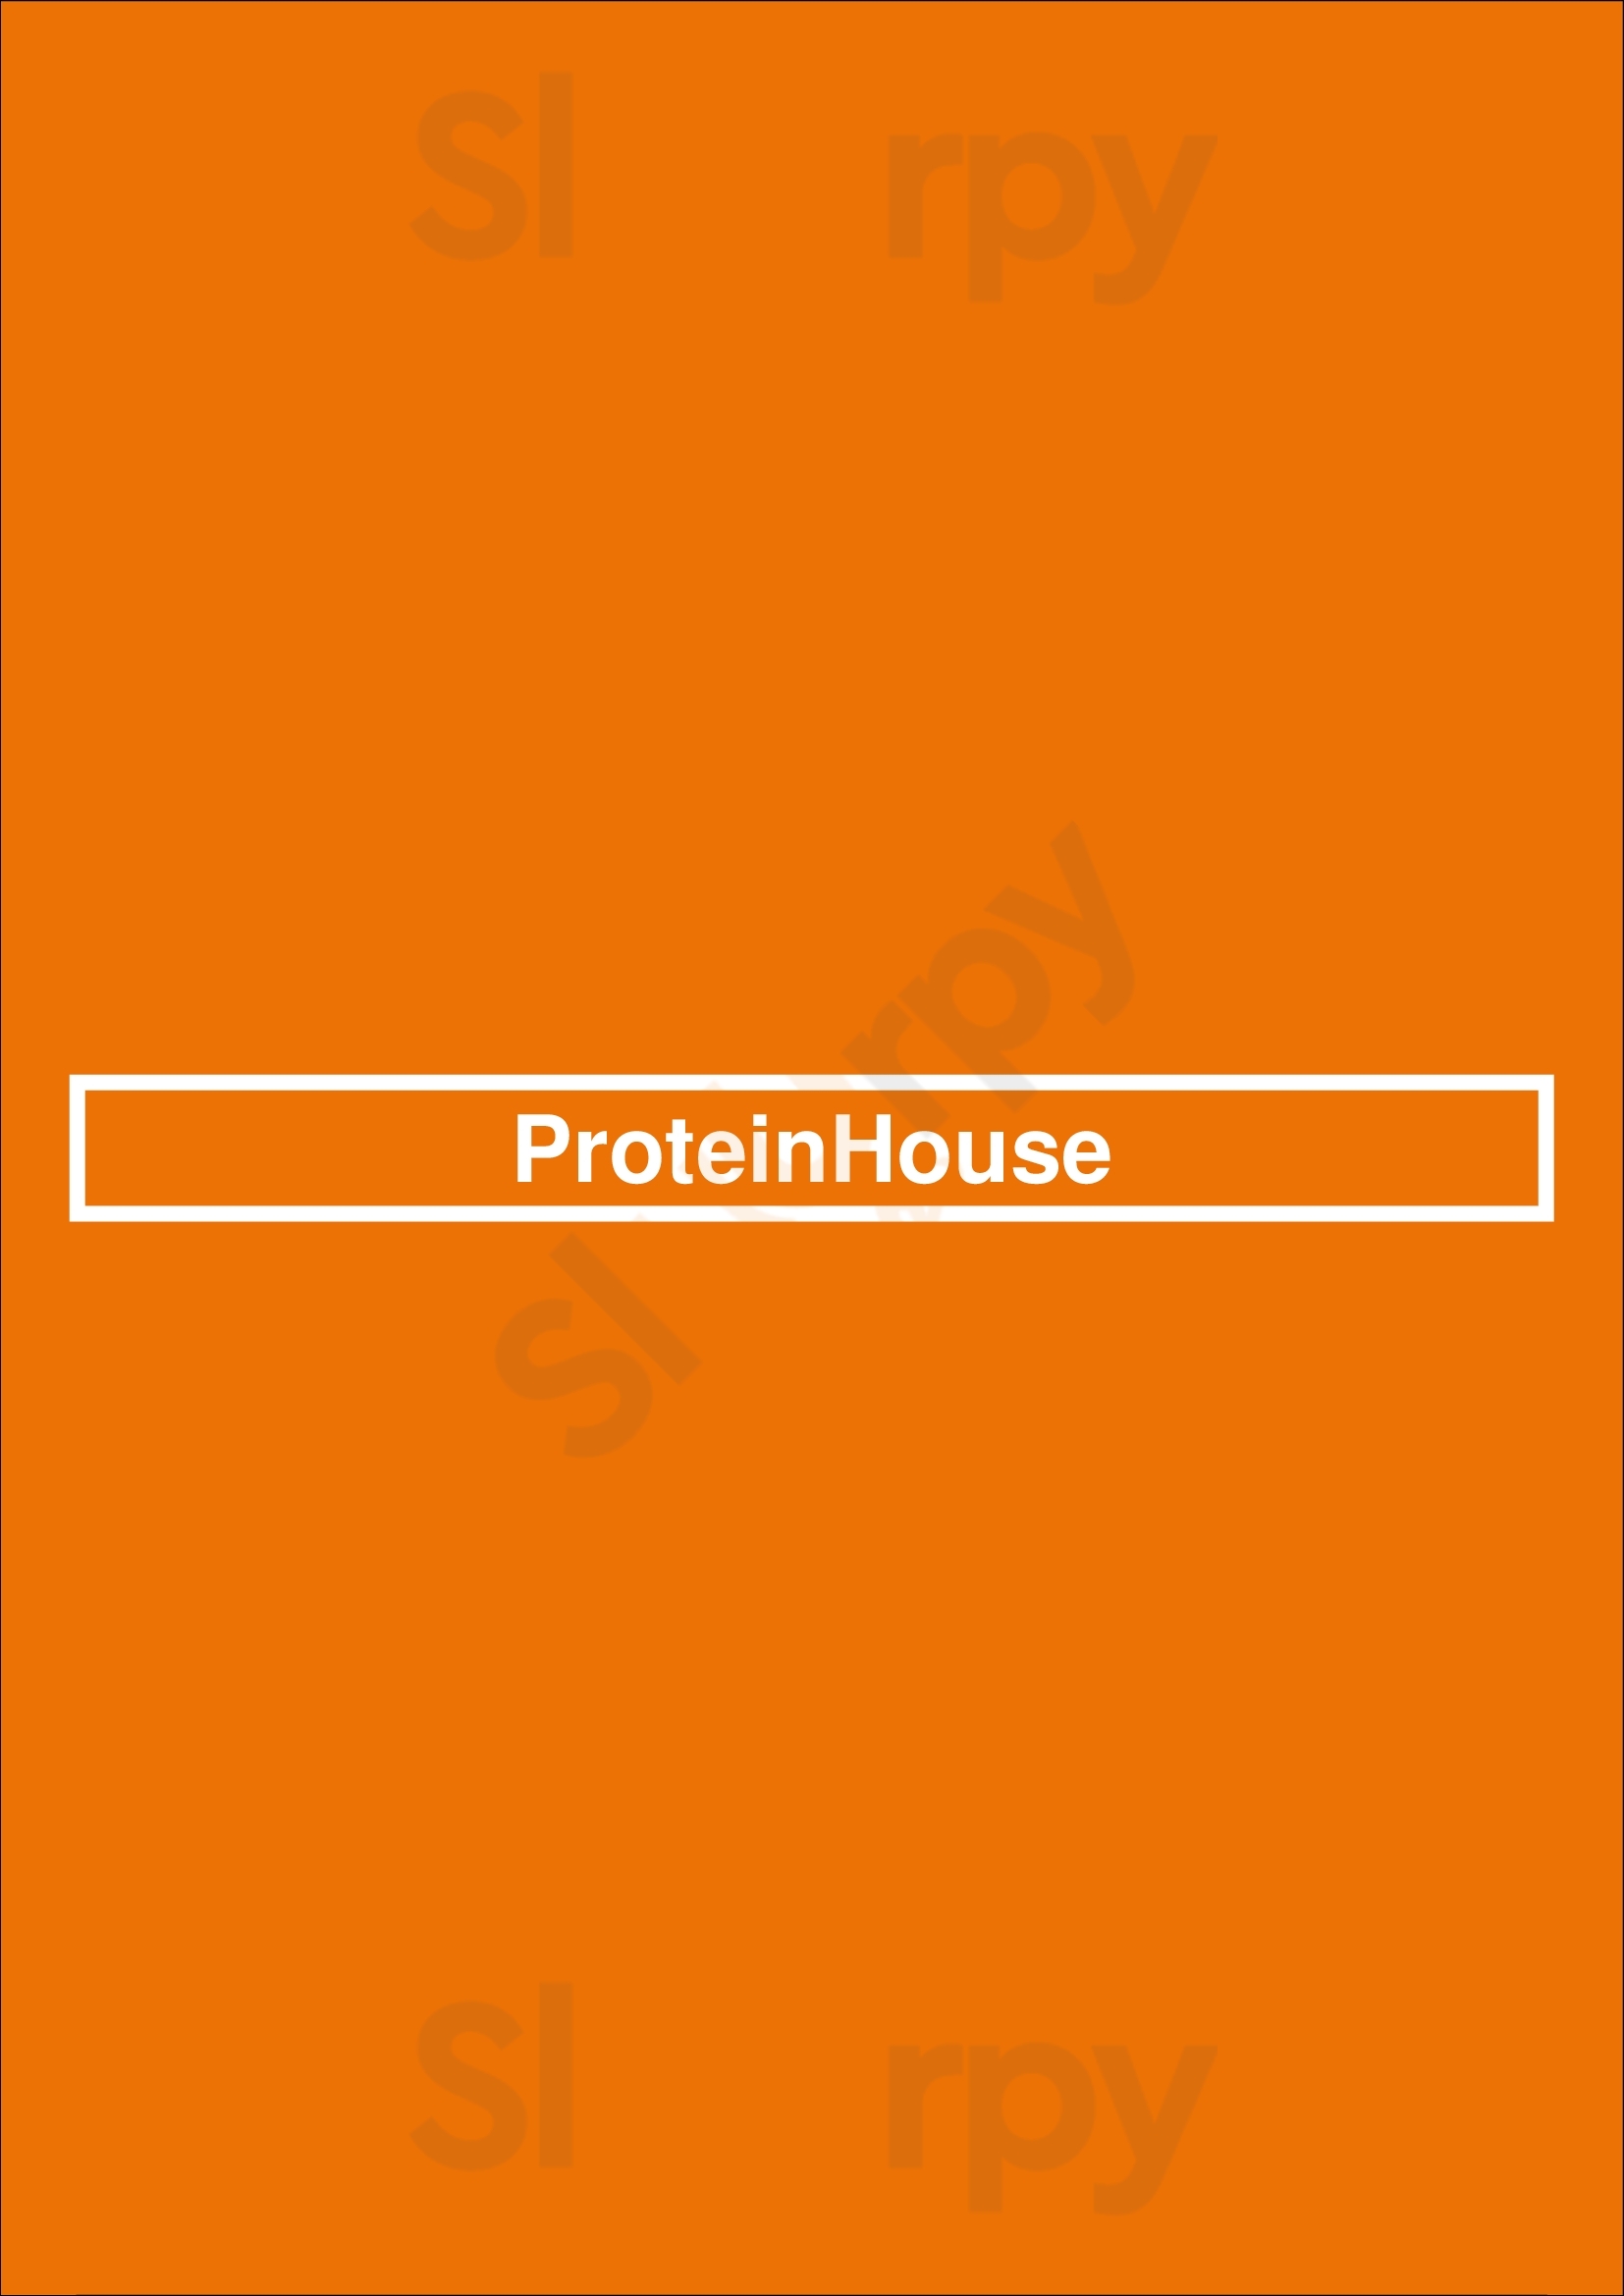 Proteinhouse Las Vegas Menu - 1